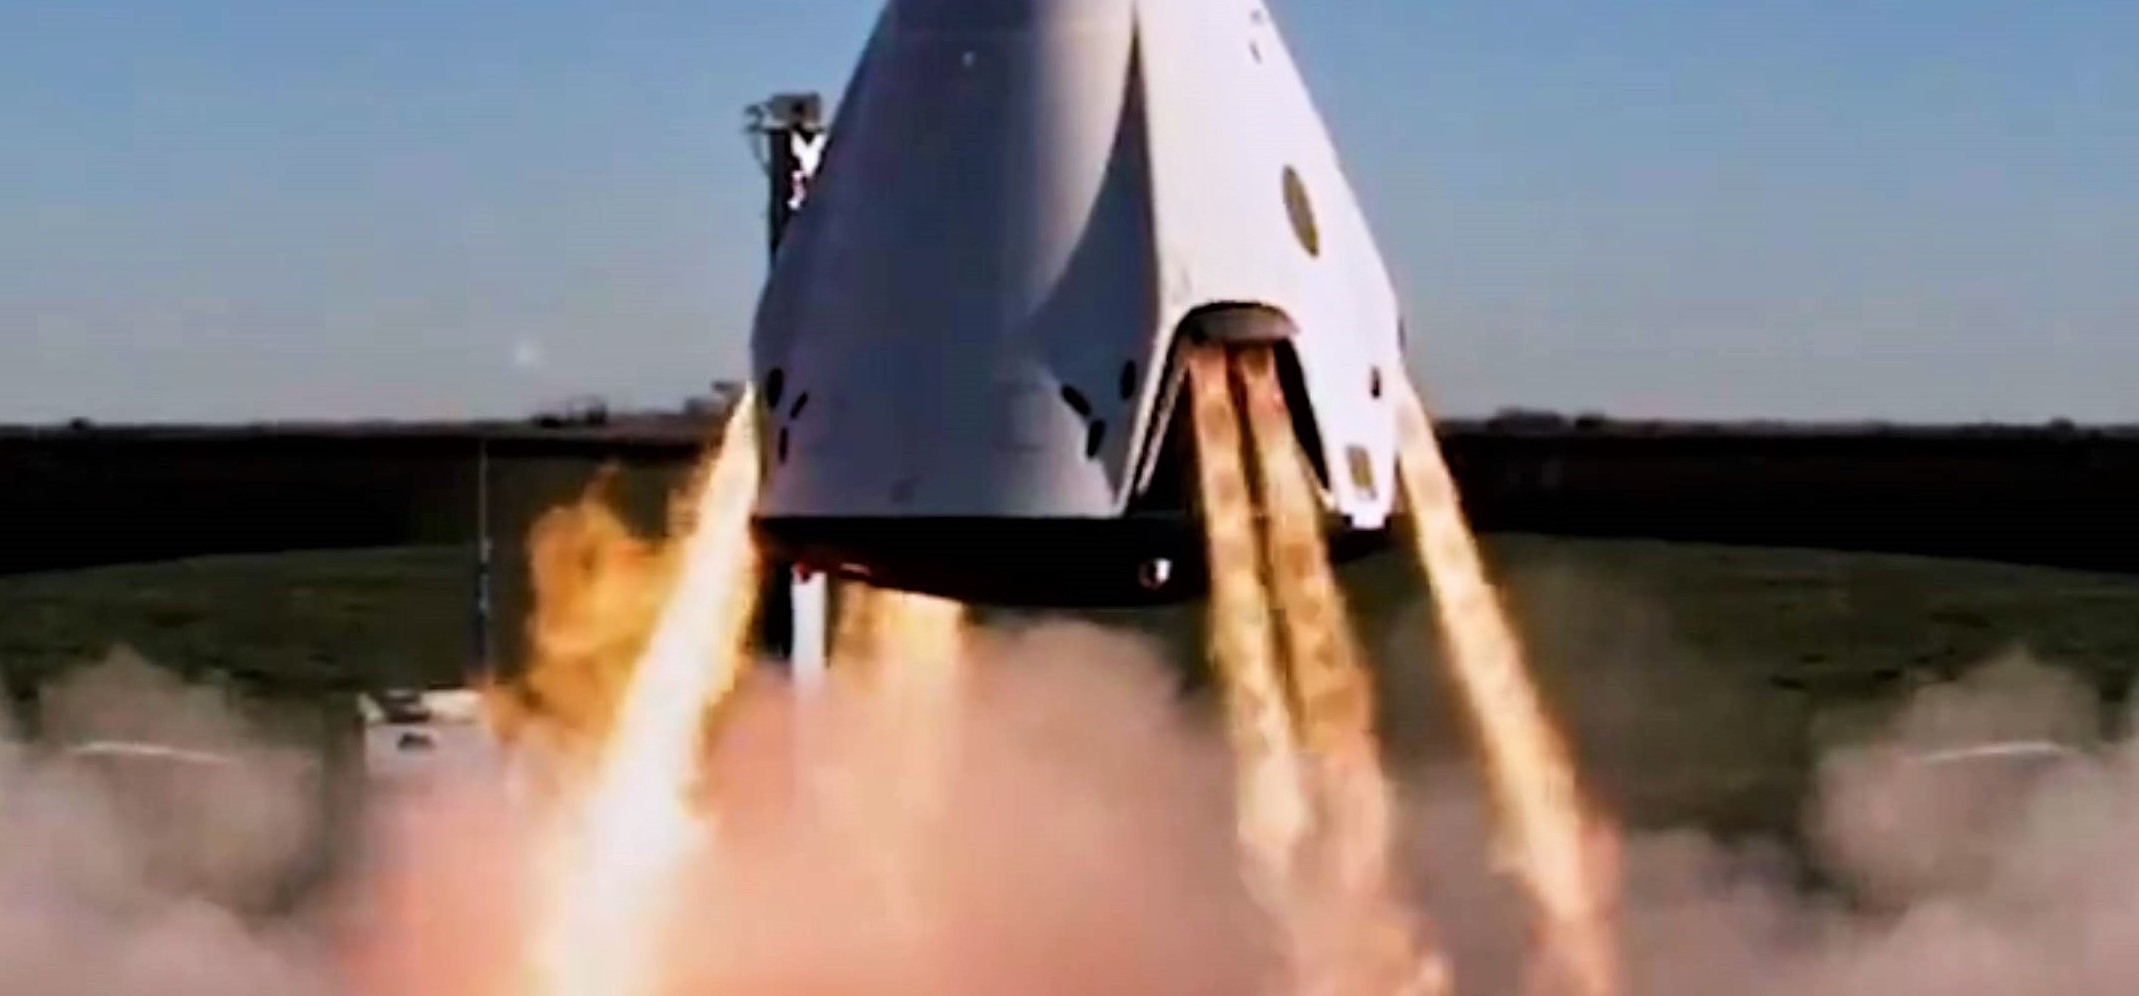 Crew Dragon SuperDraco highlight reel Sept 2019 (SpaceX) 11 crop 2